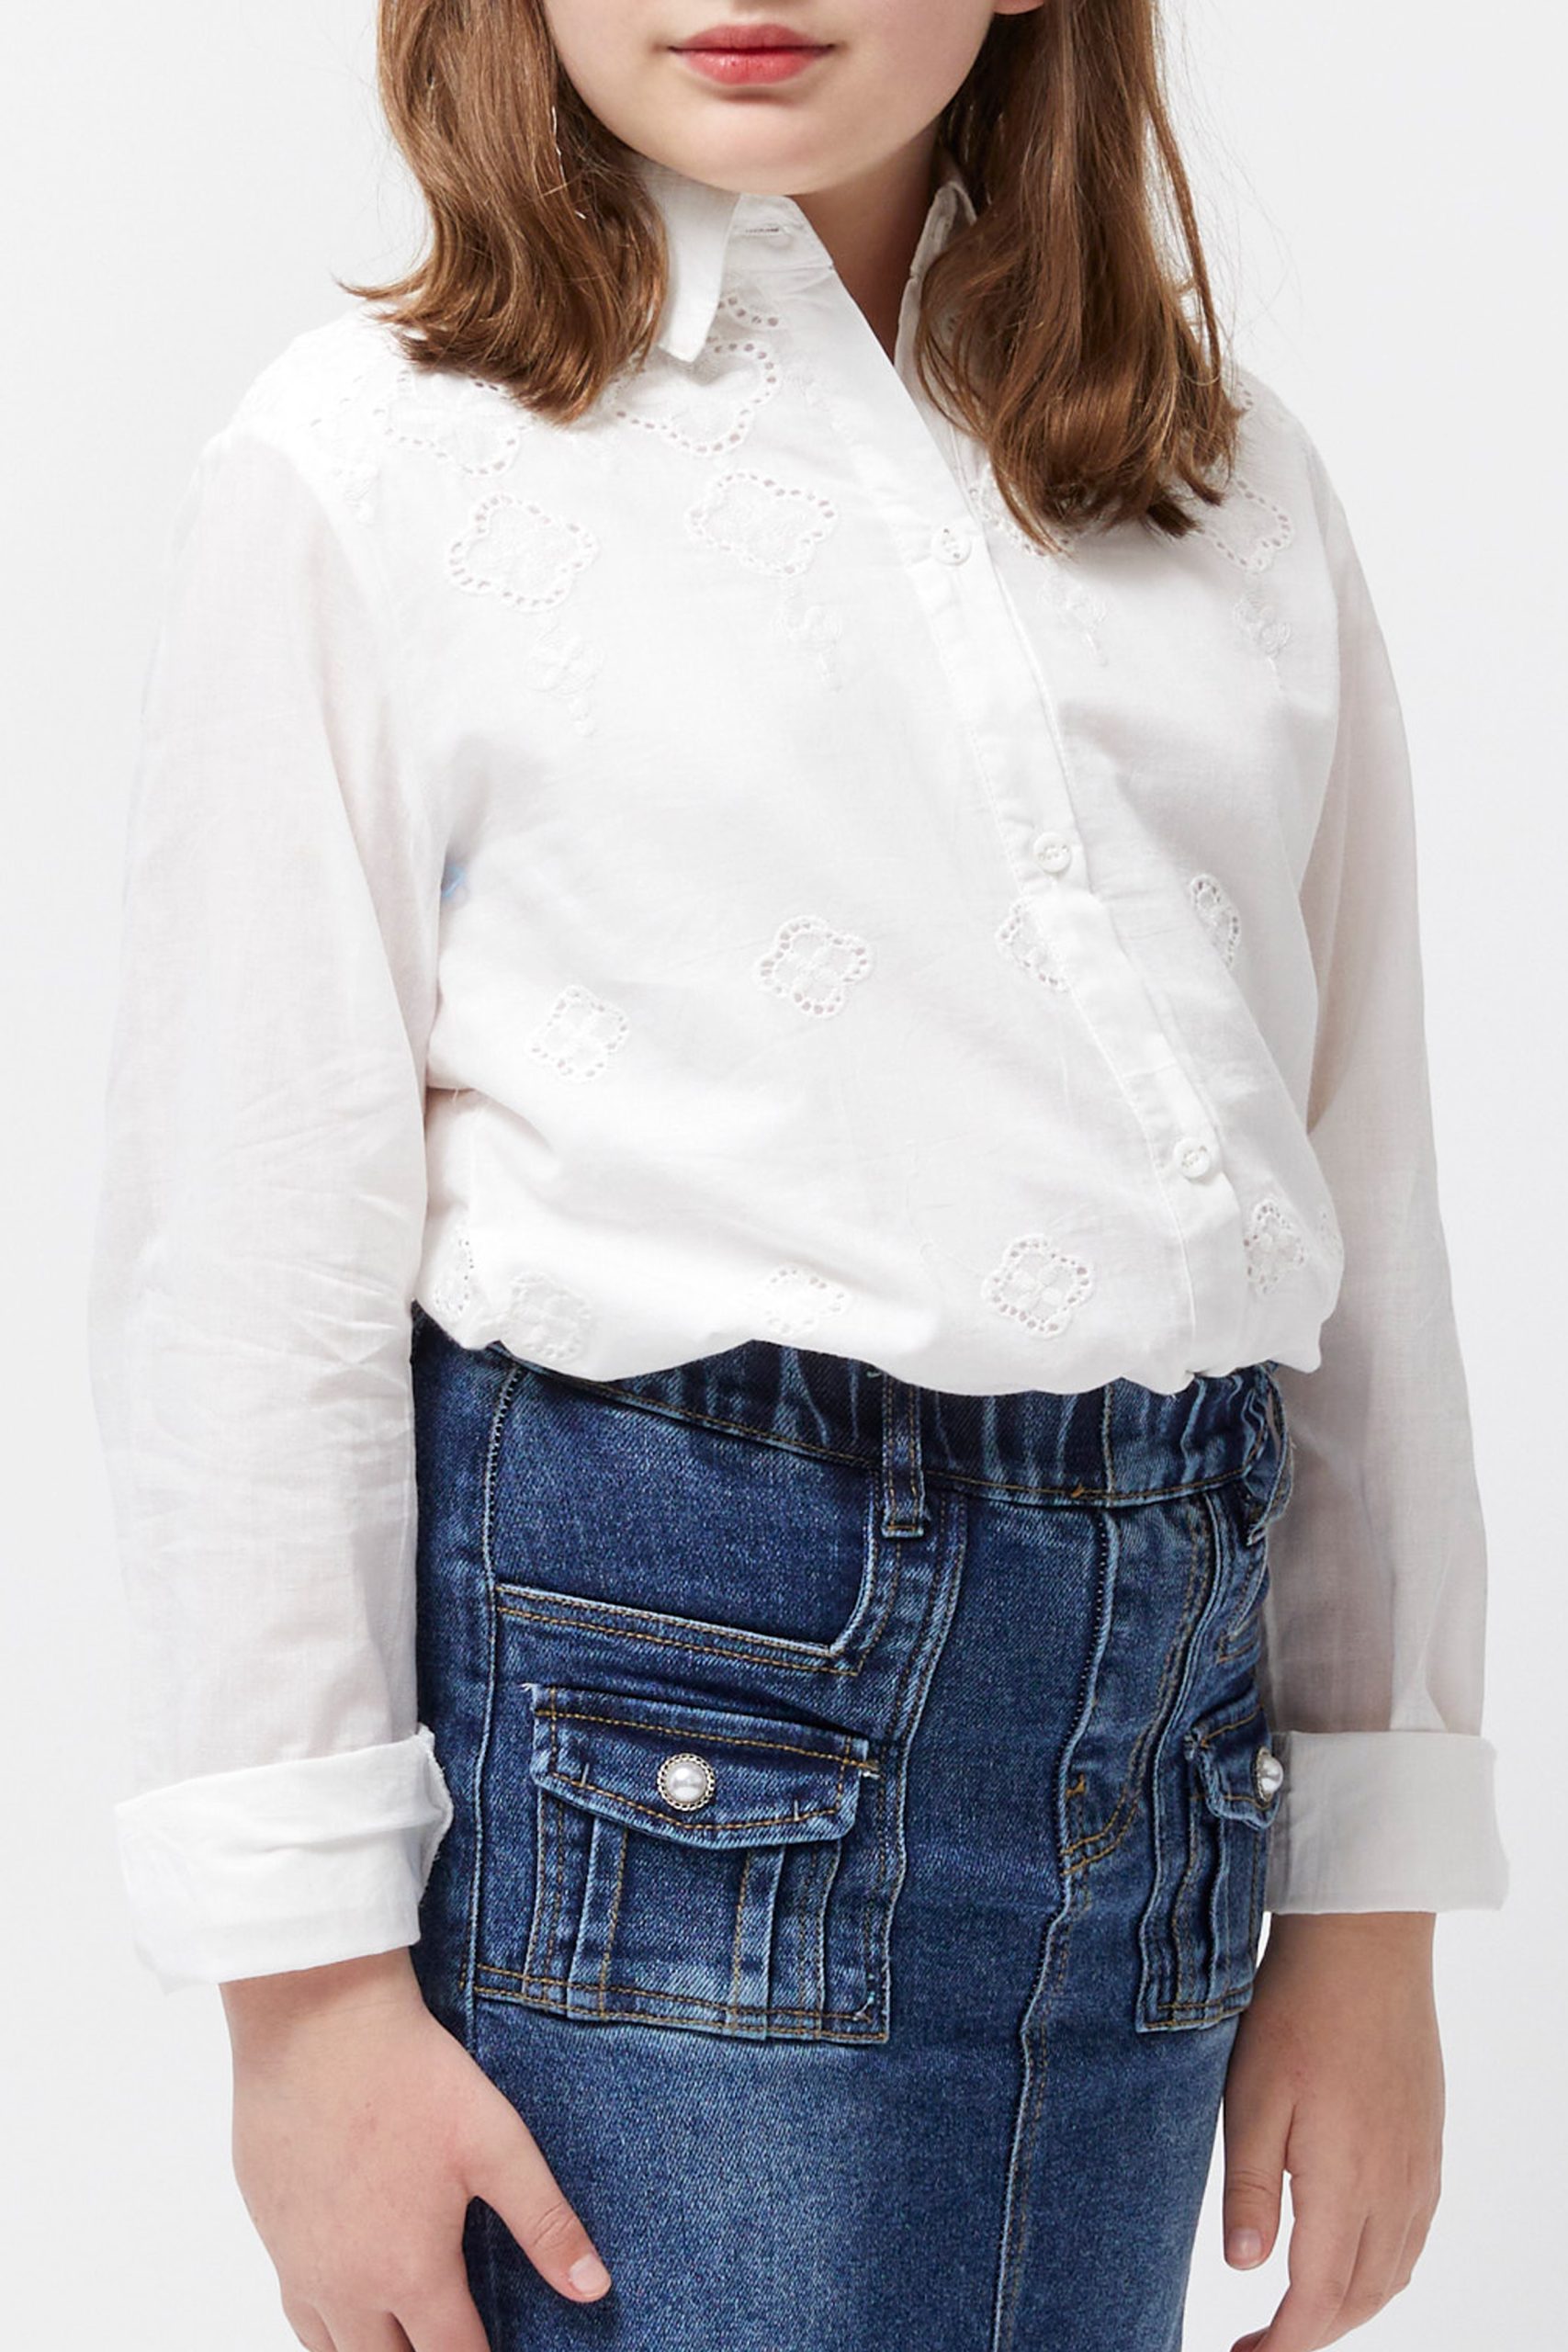 Girls Lace Long Sleeve Shirt - Koolkutela Fashion